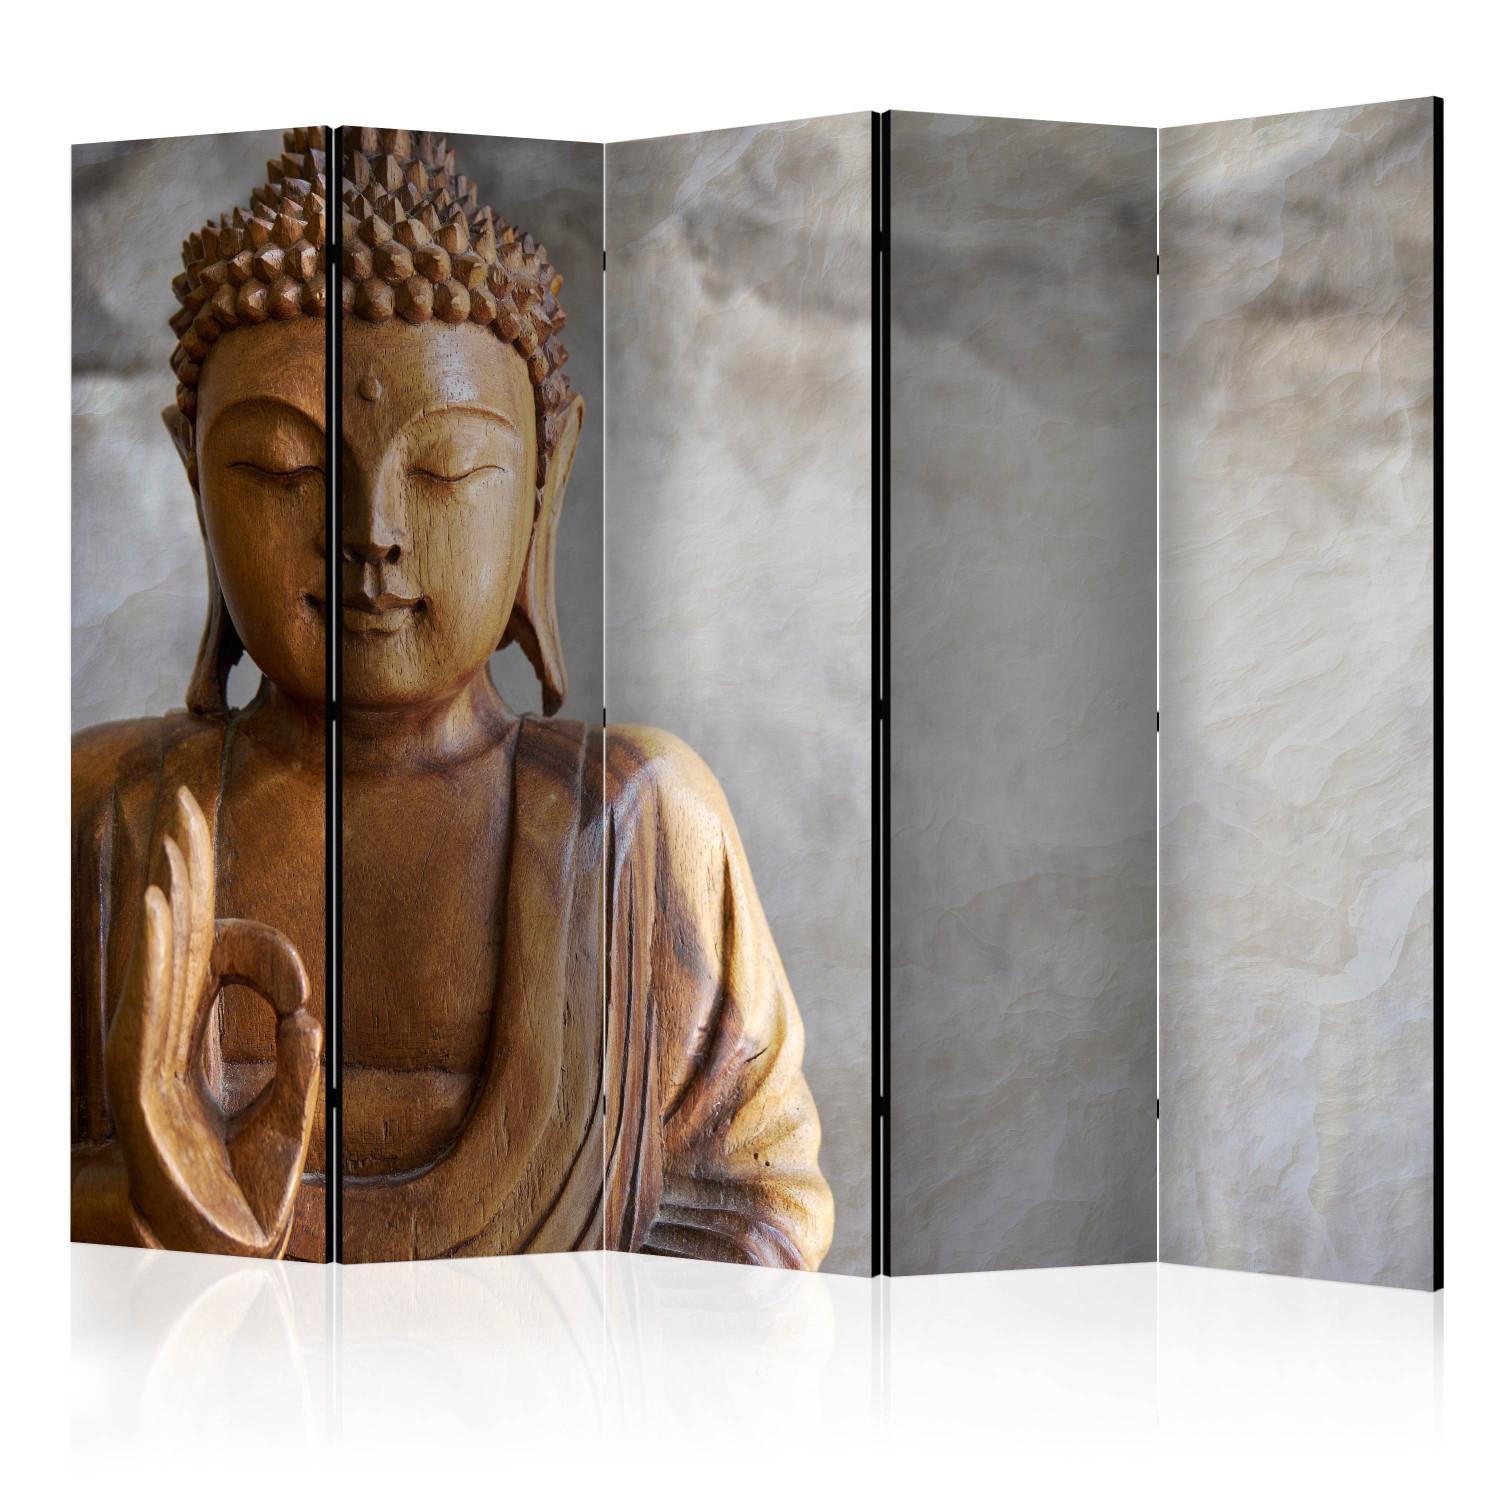 Biombo Buda II - Buda de madera sobre fondo gris en estilo Zen